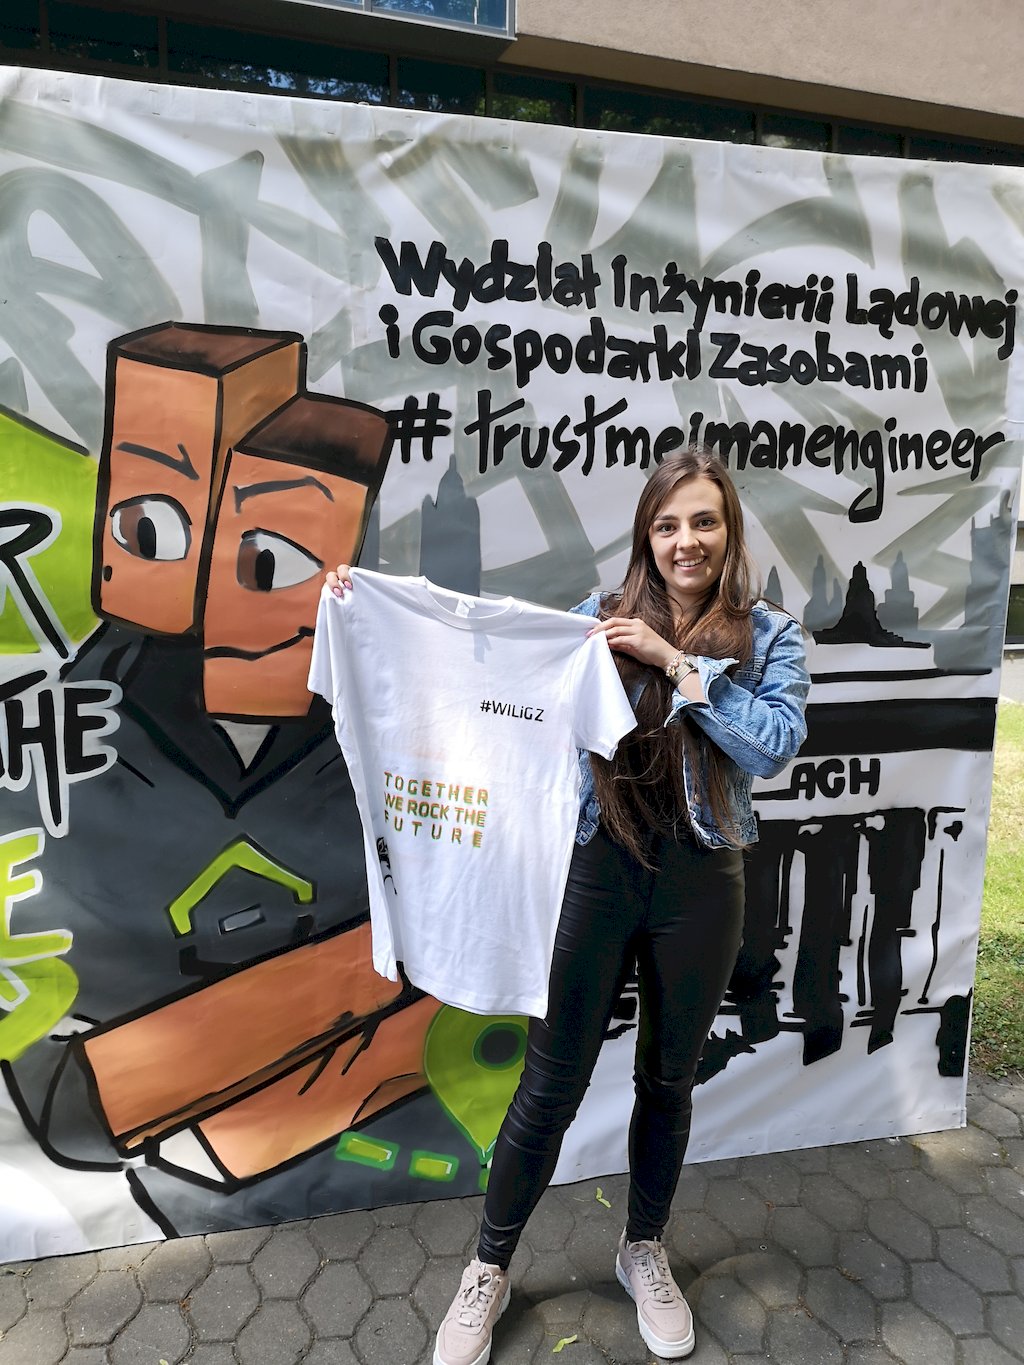 Studentka prezentuje koszulkę z napisem Together we rock the future